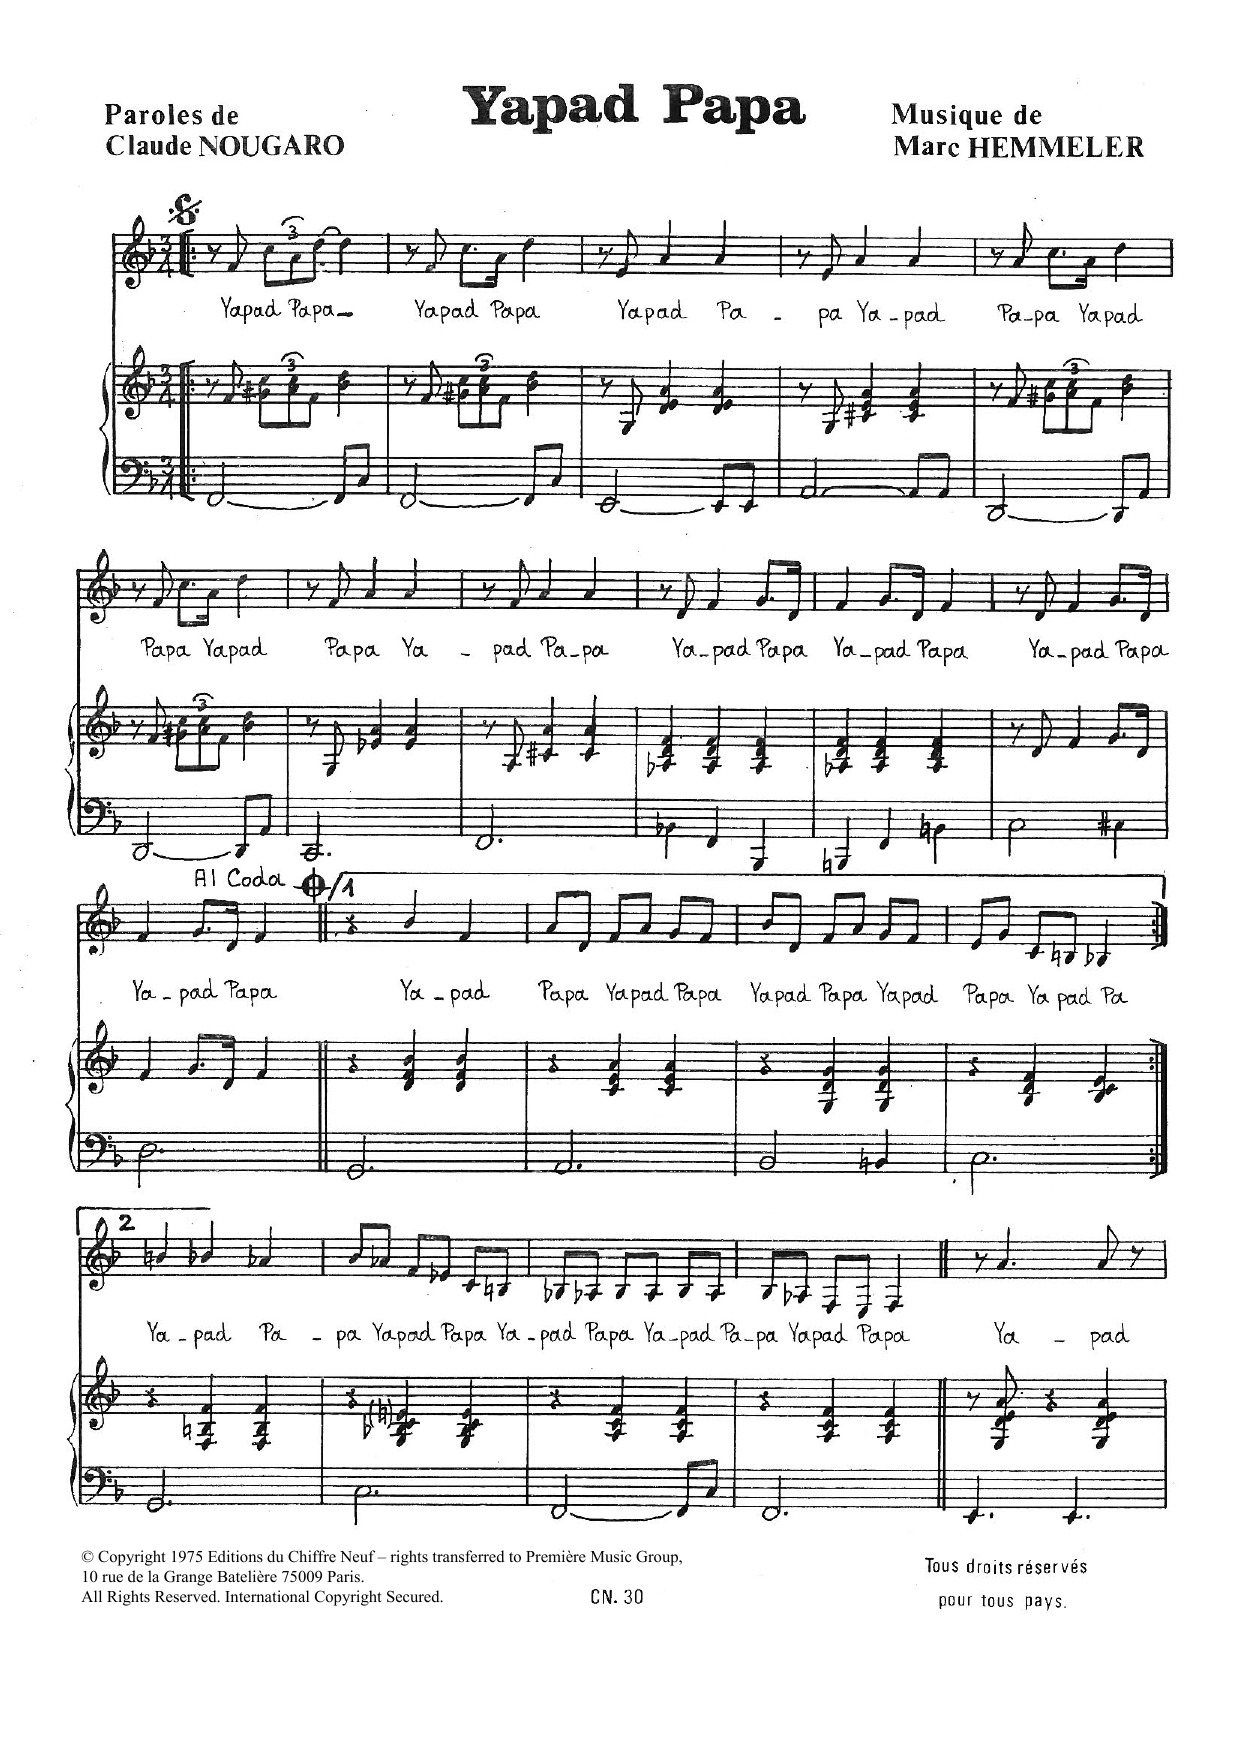 Claude Nougaro Yapad Papa Sheet Music Notes & Chords for Piano & Vocal - Download or Print PDF